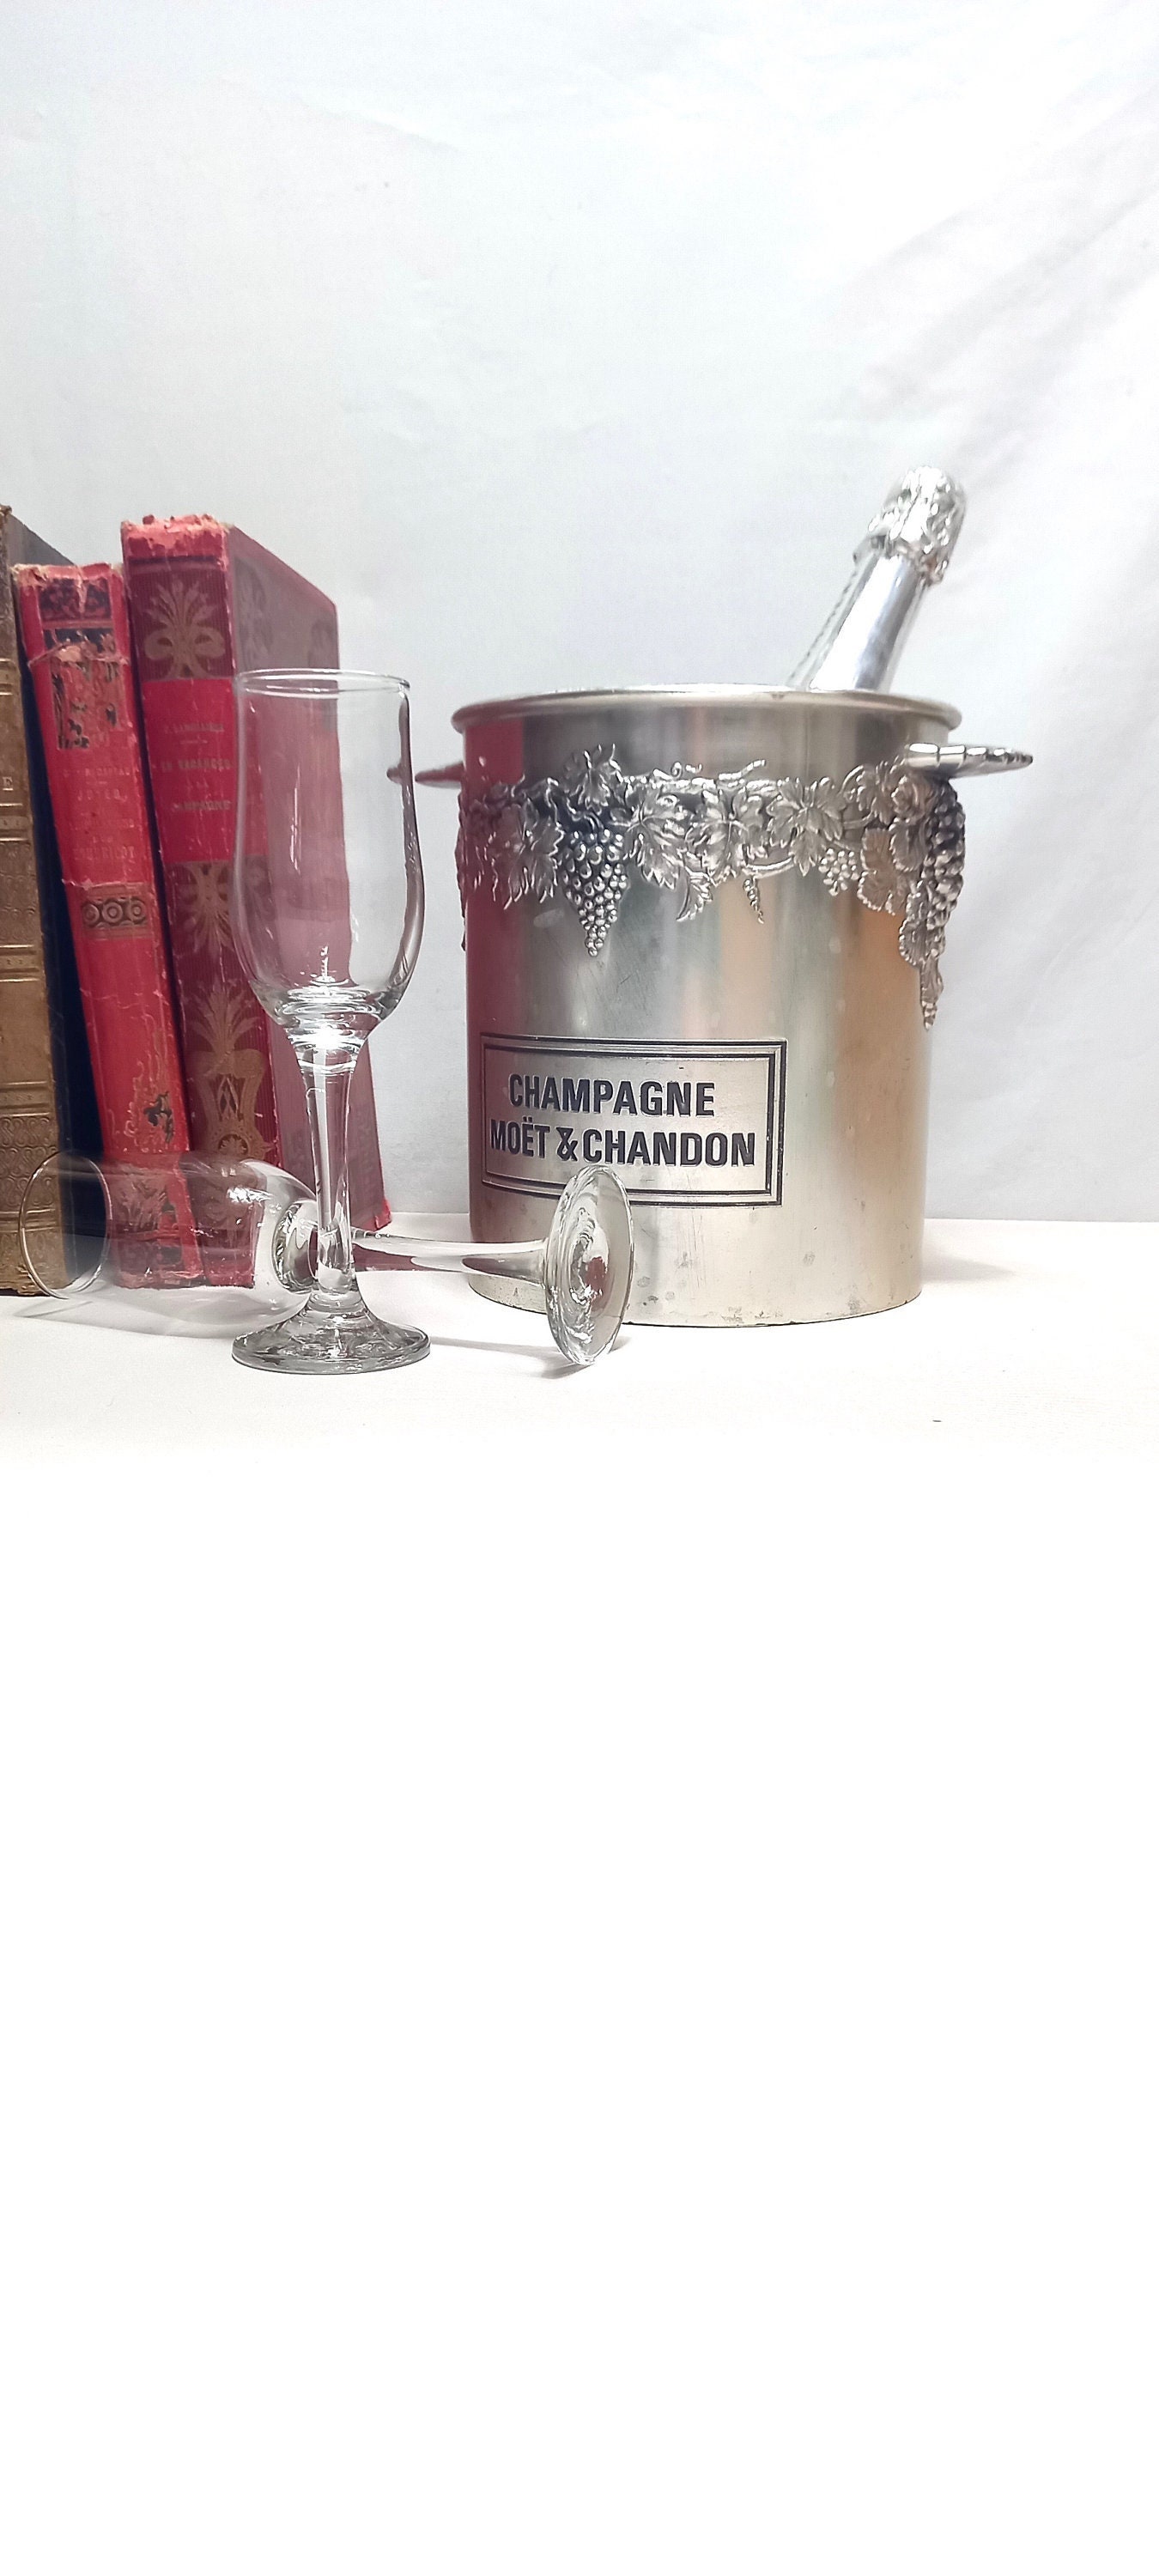 Moët & Chandon Champagne Ice Bucket Bottle Cooler Prestige Vasque Gold  Transparent Ice Container for…See more Moët & Chandon Champagne Ice Bucket